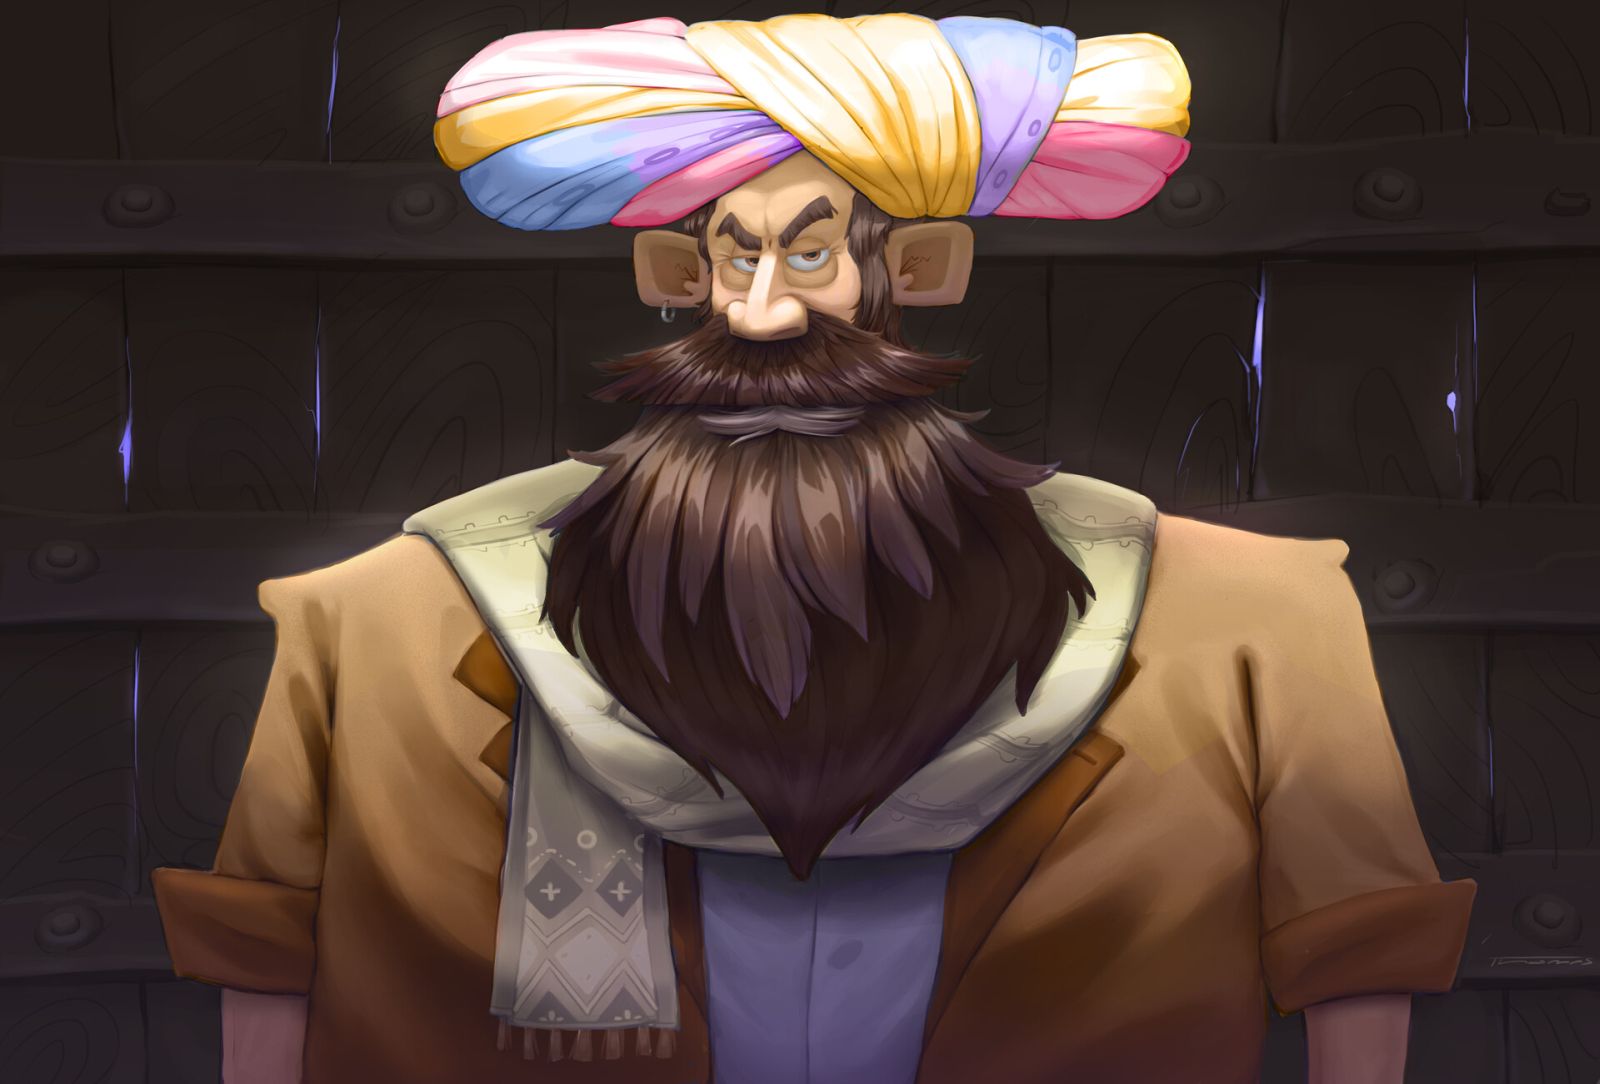 rajasthani digital illustration turban man by thomas fernandes